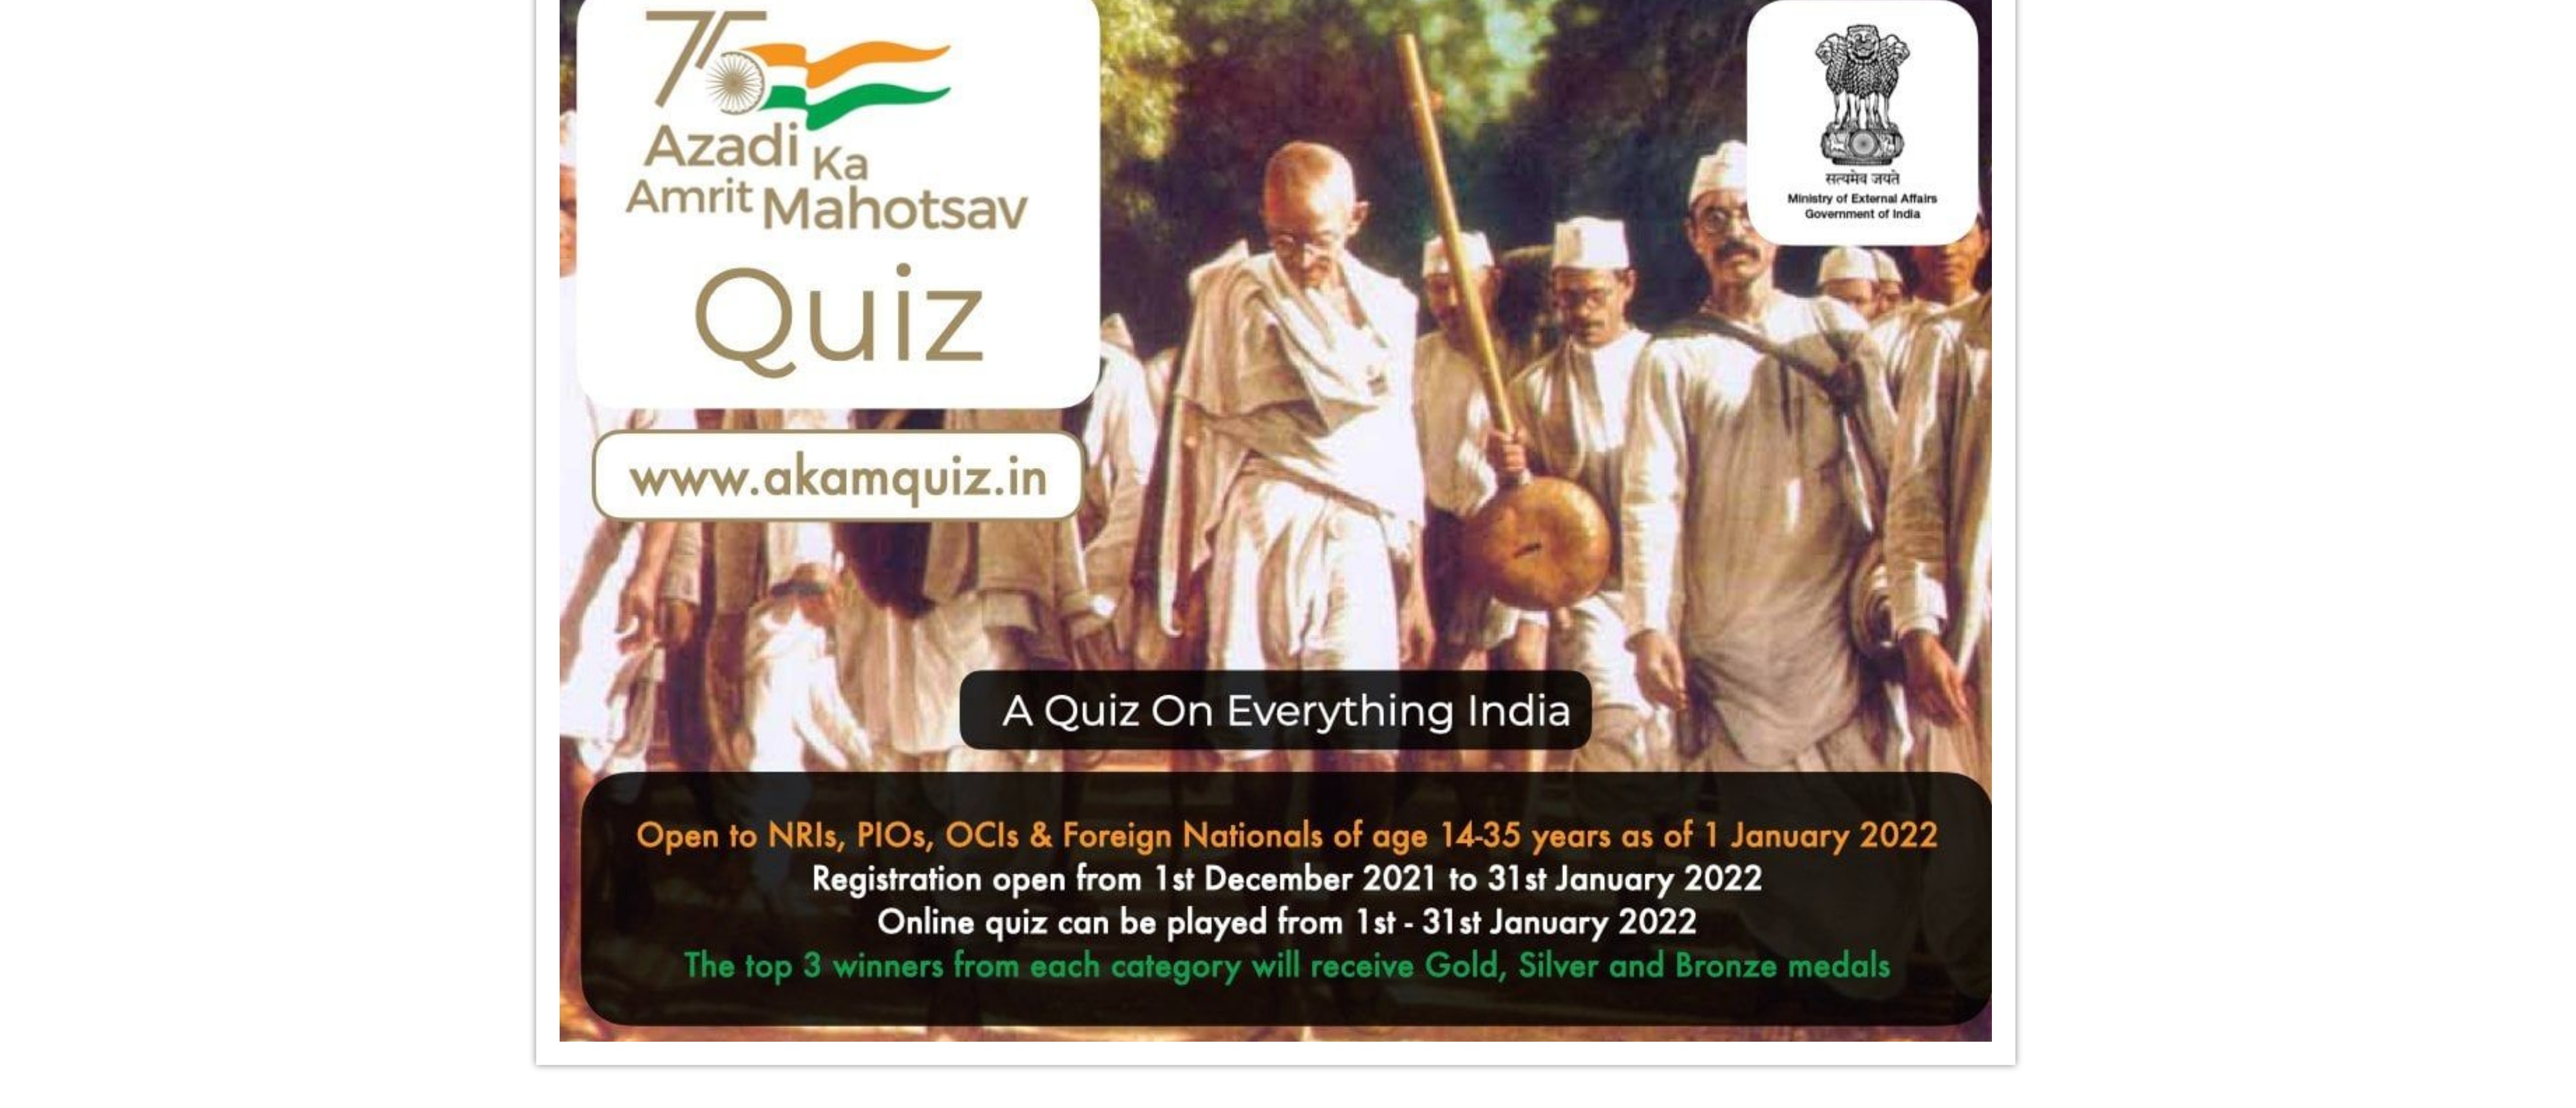  Azadi Ka Amrit Mahotsav Quiz to commemorate 75 years of India’s Independence